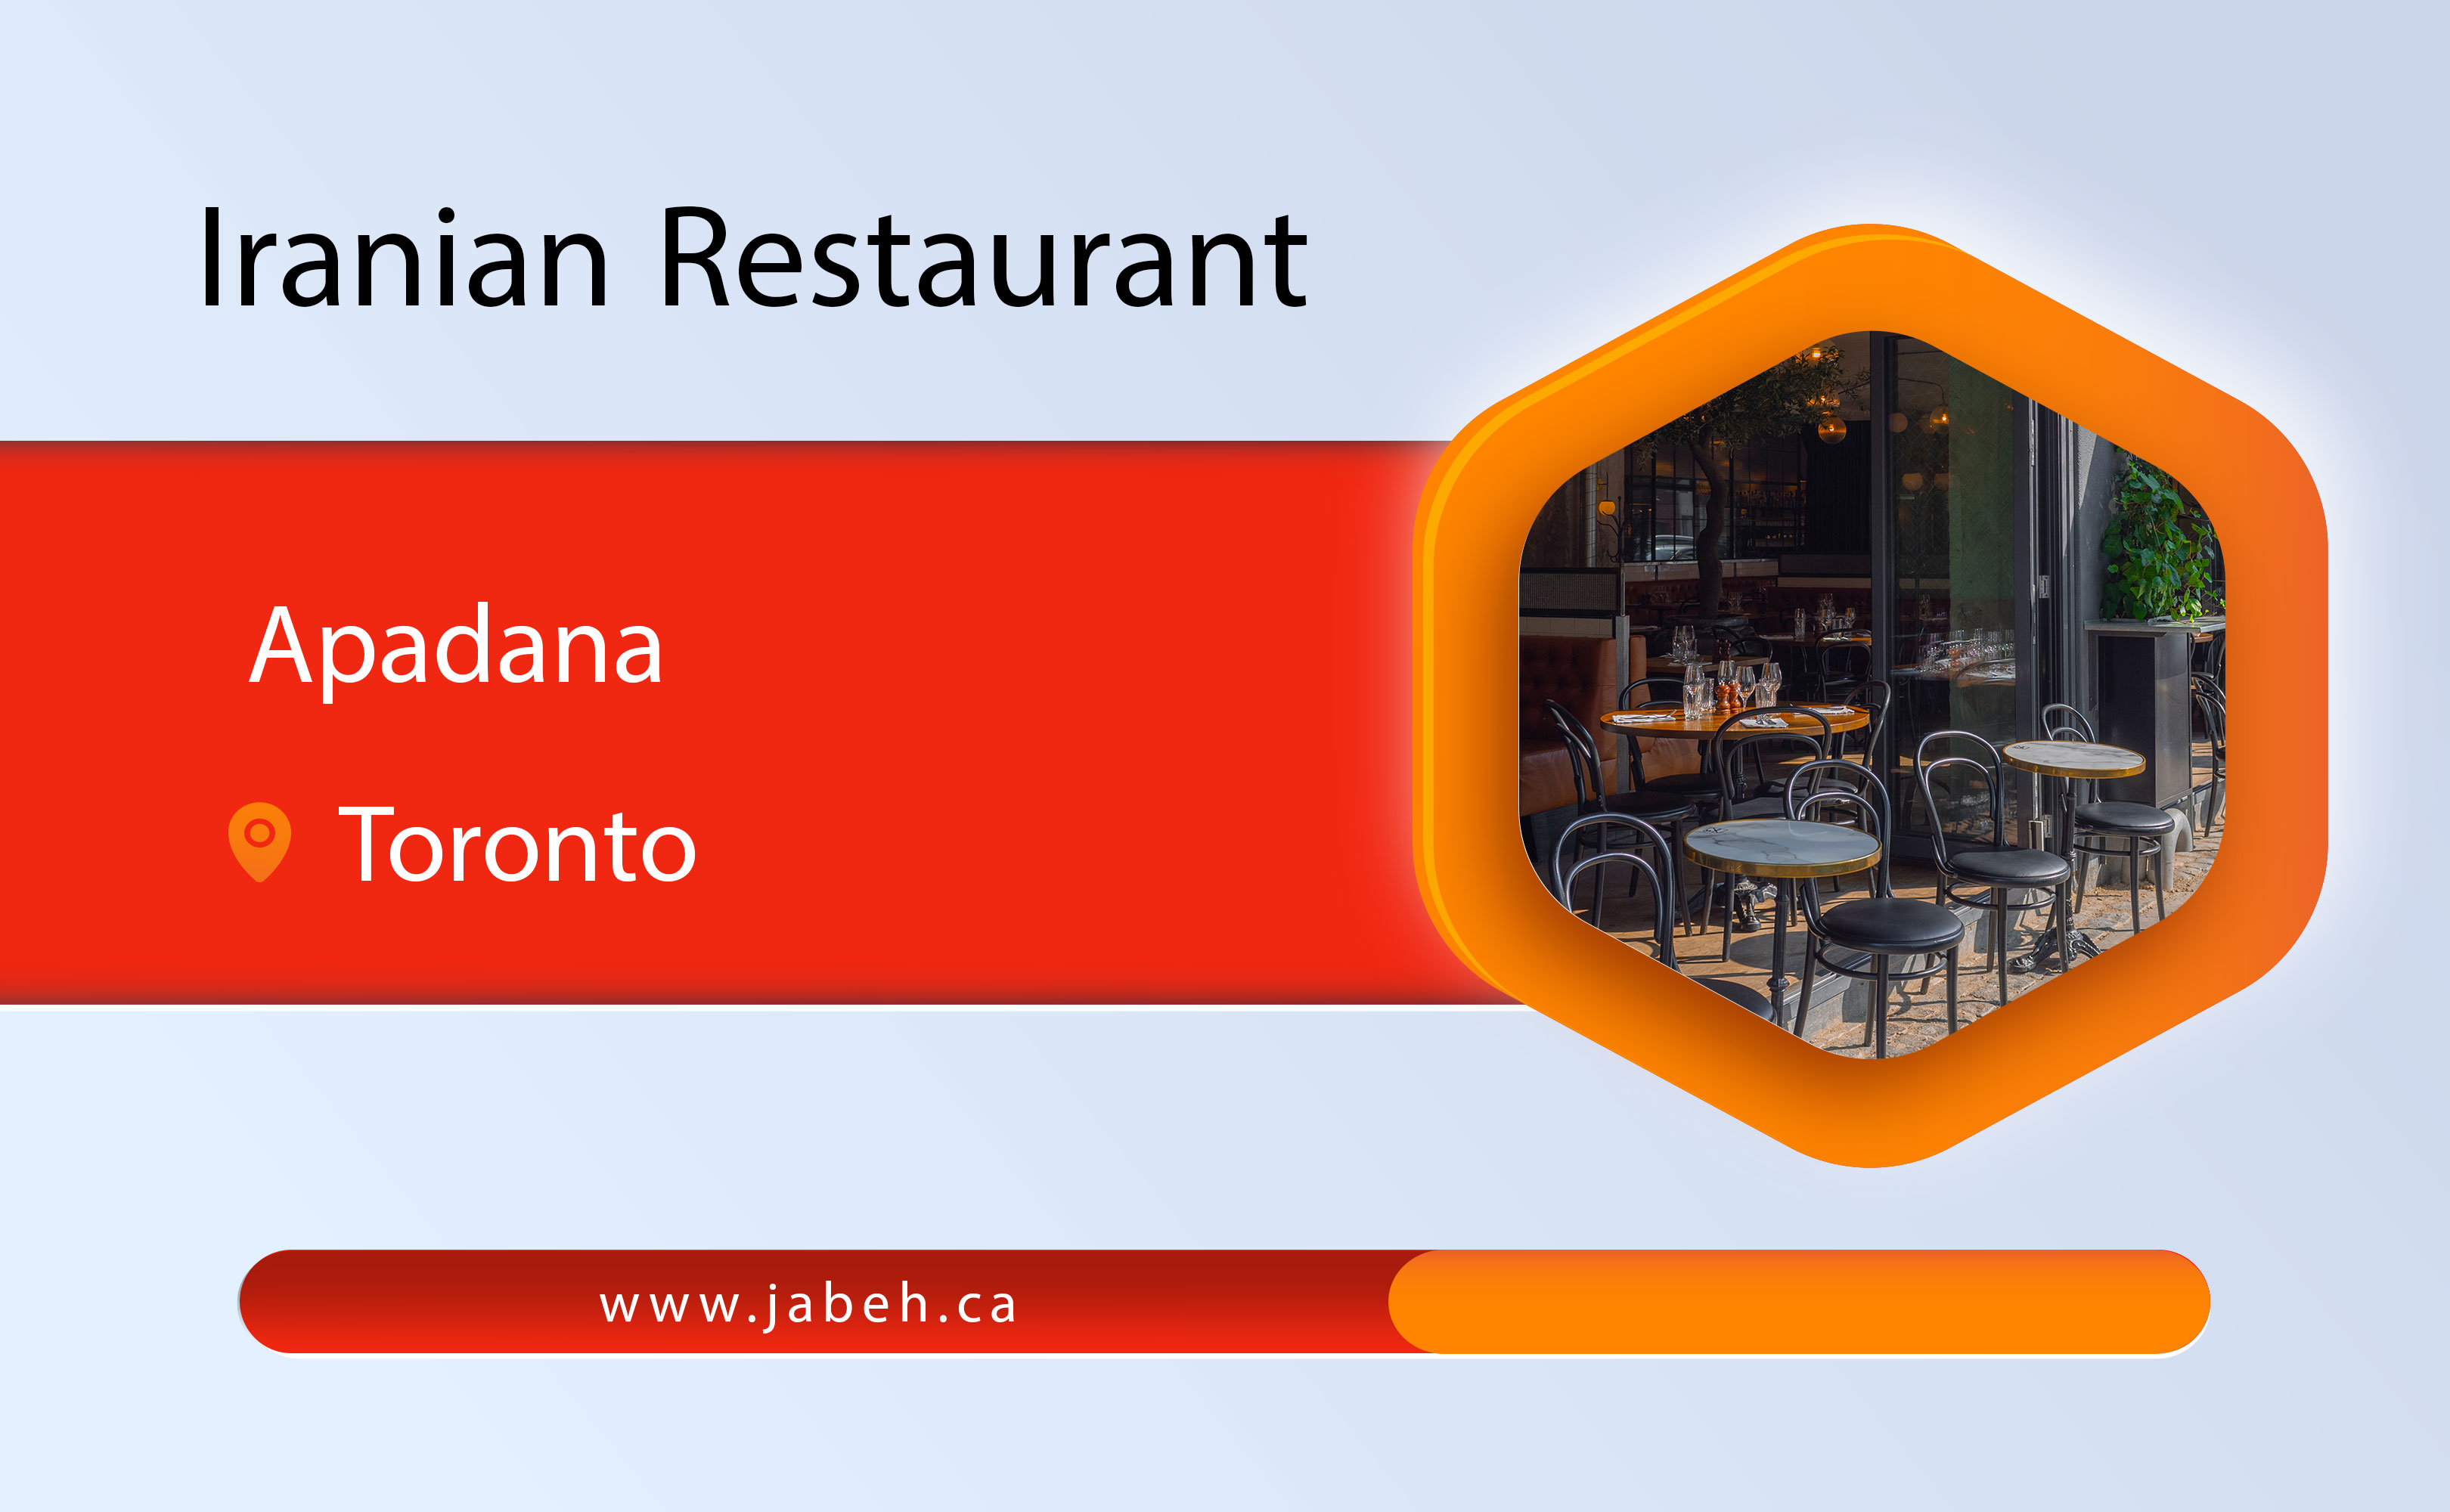 Apadana Irani restaurant in Toronto